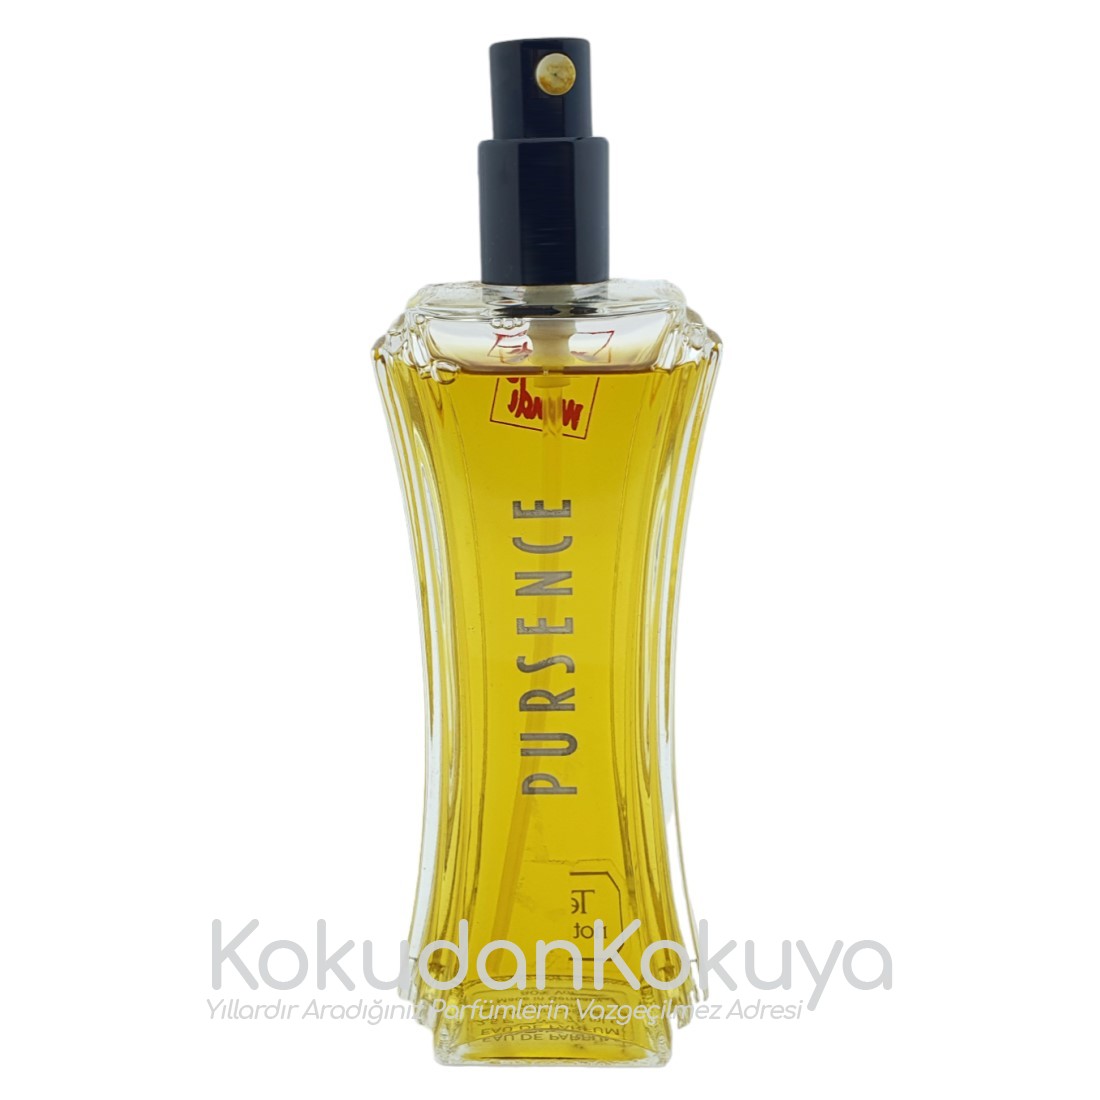 MONDI Pursence (Vintage) Parfüm Kadın 75ml Eau De Parfum (EDP) Sprey 